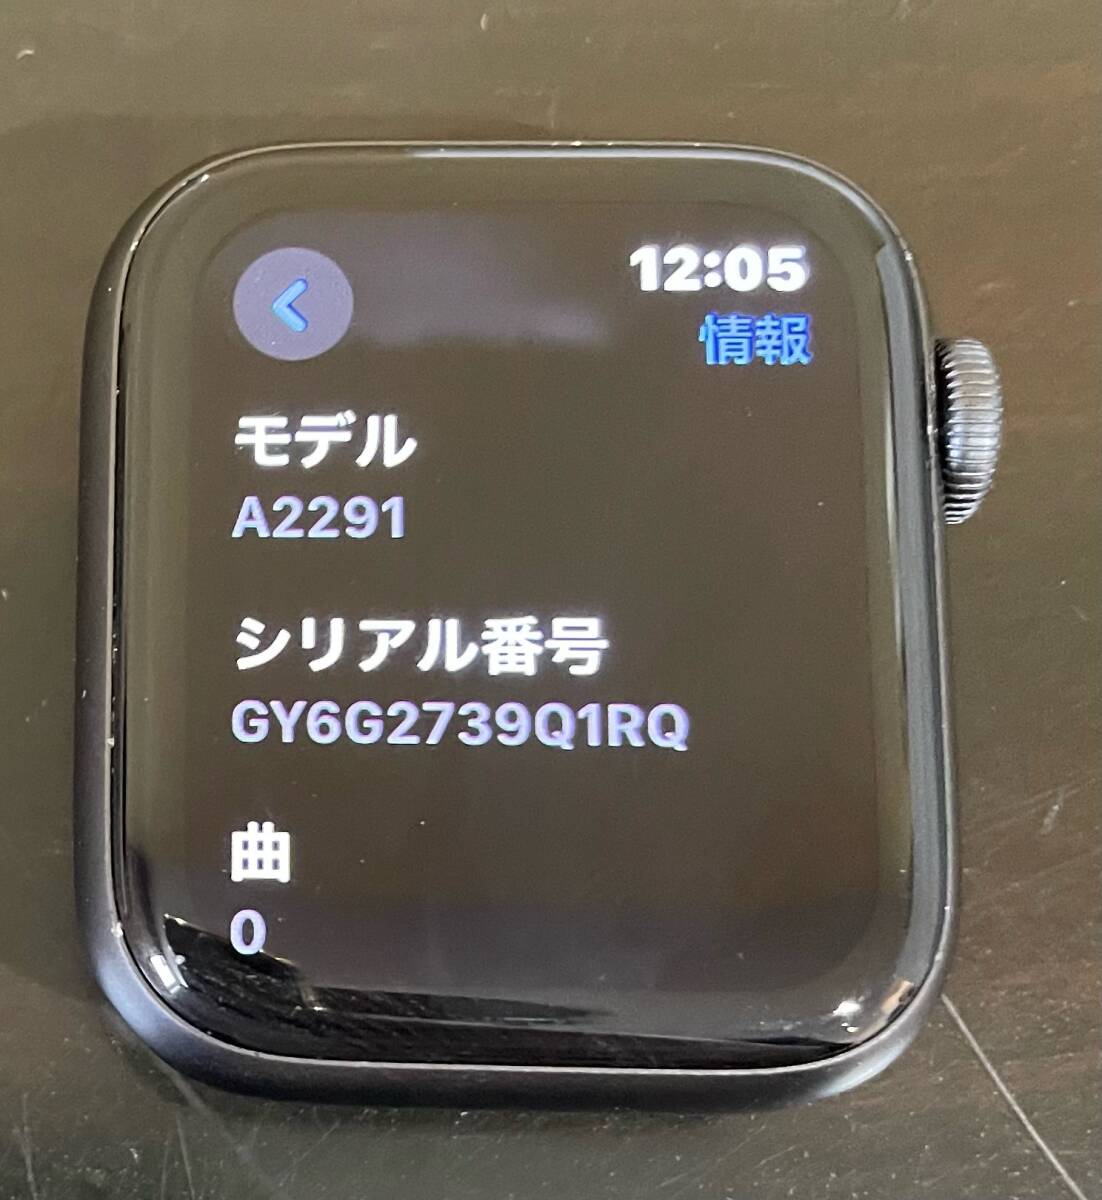  cheap!! 99 jpy start!! Apple Watch Apple watch series 6 GPS model 40mm A2291 32GB smart watch Acty beige .n cancellation ending 